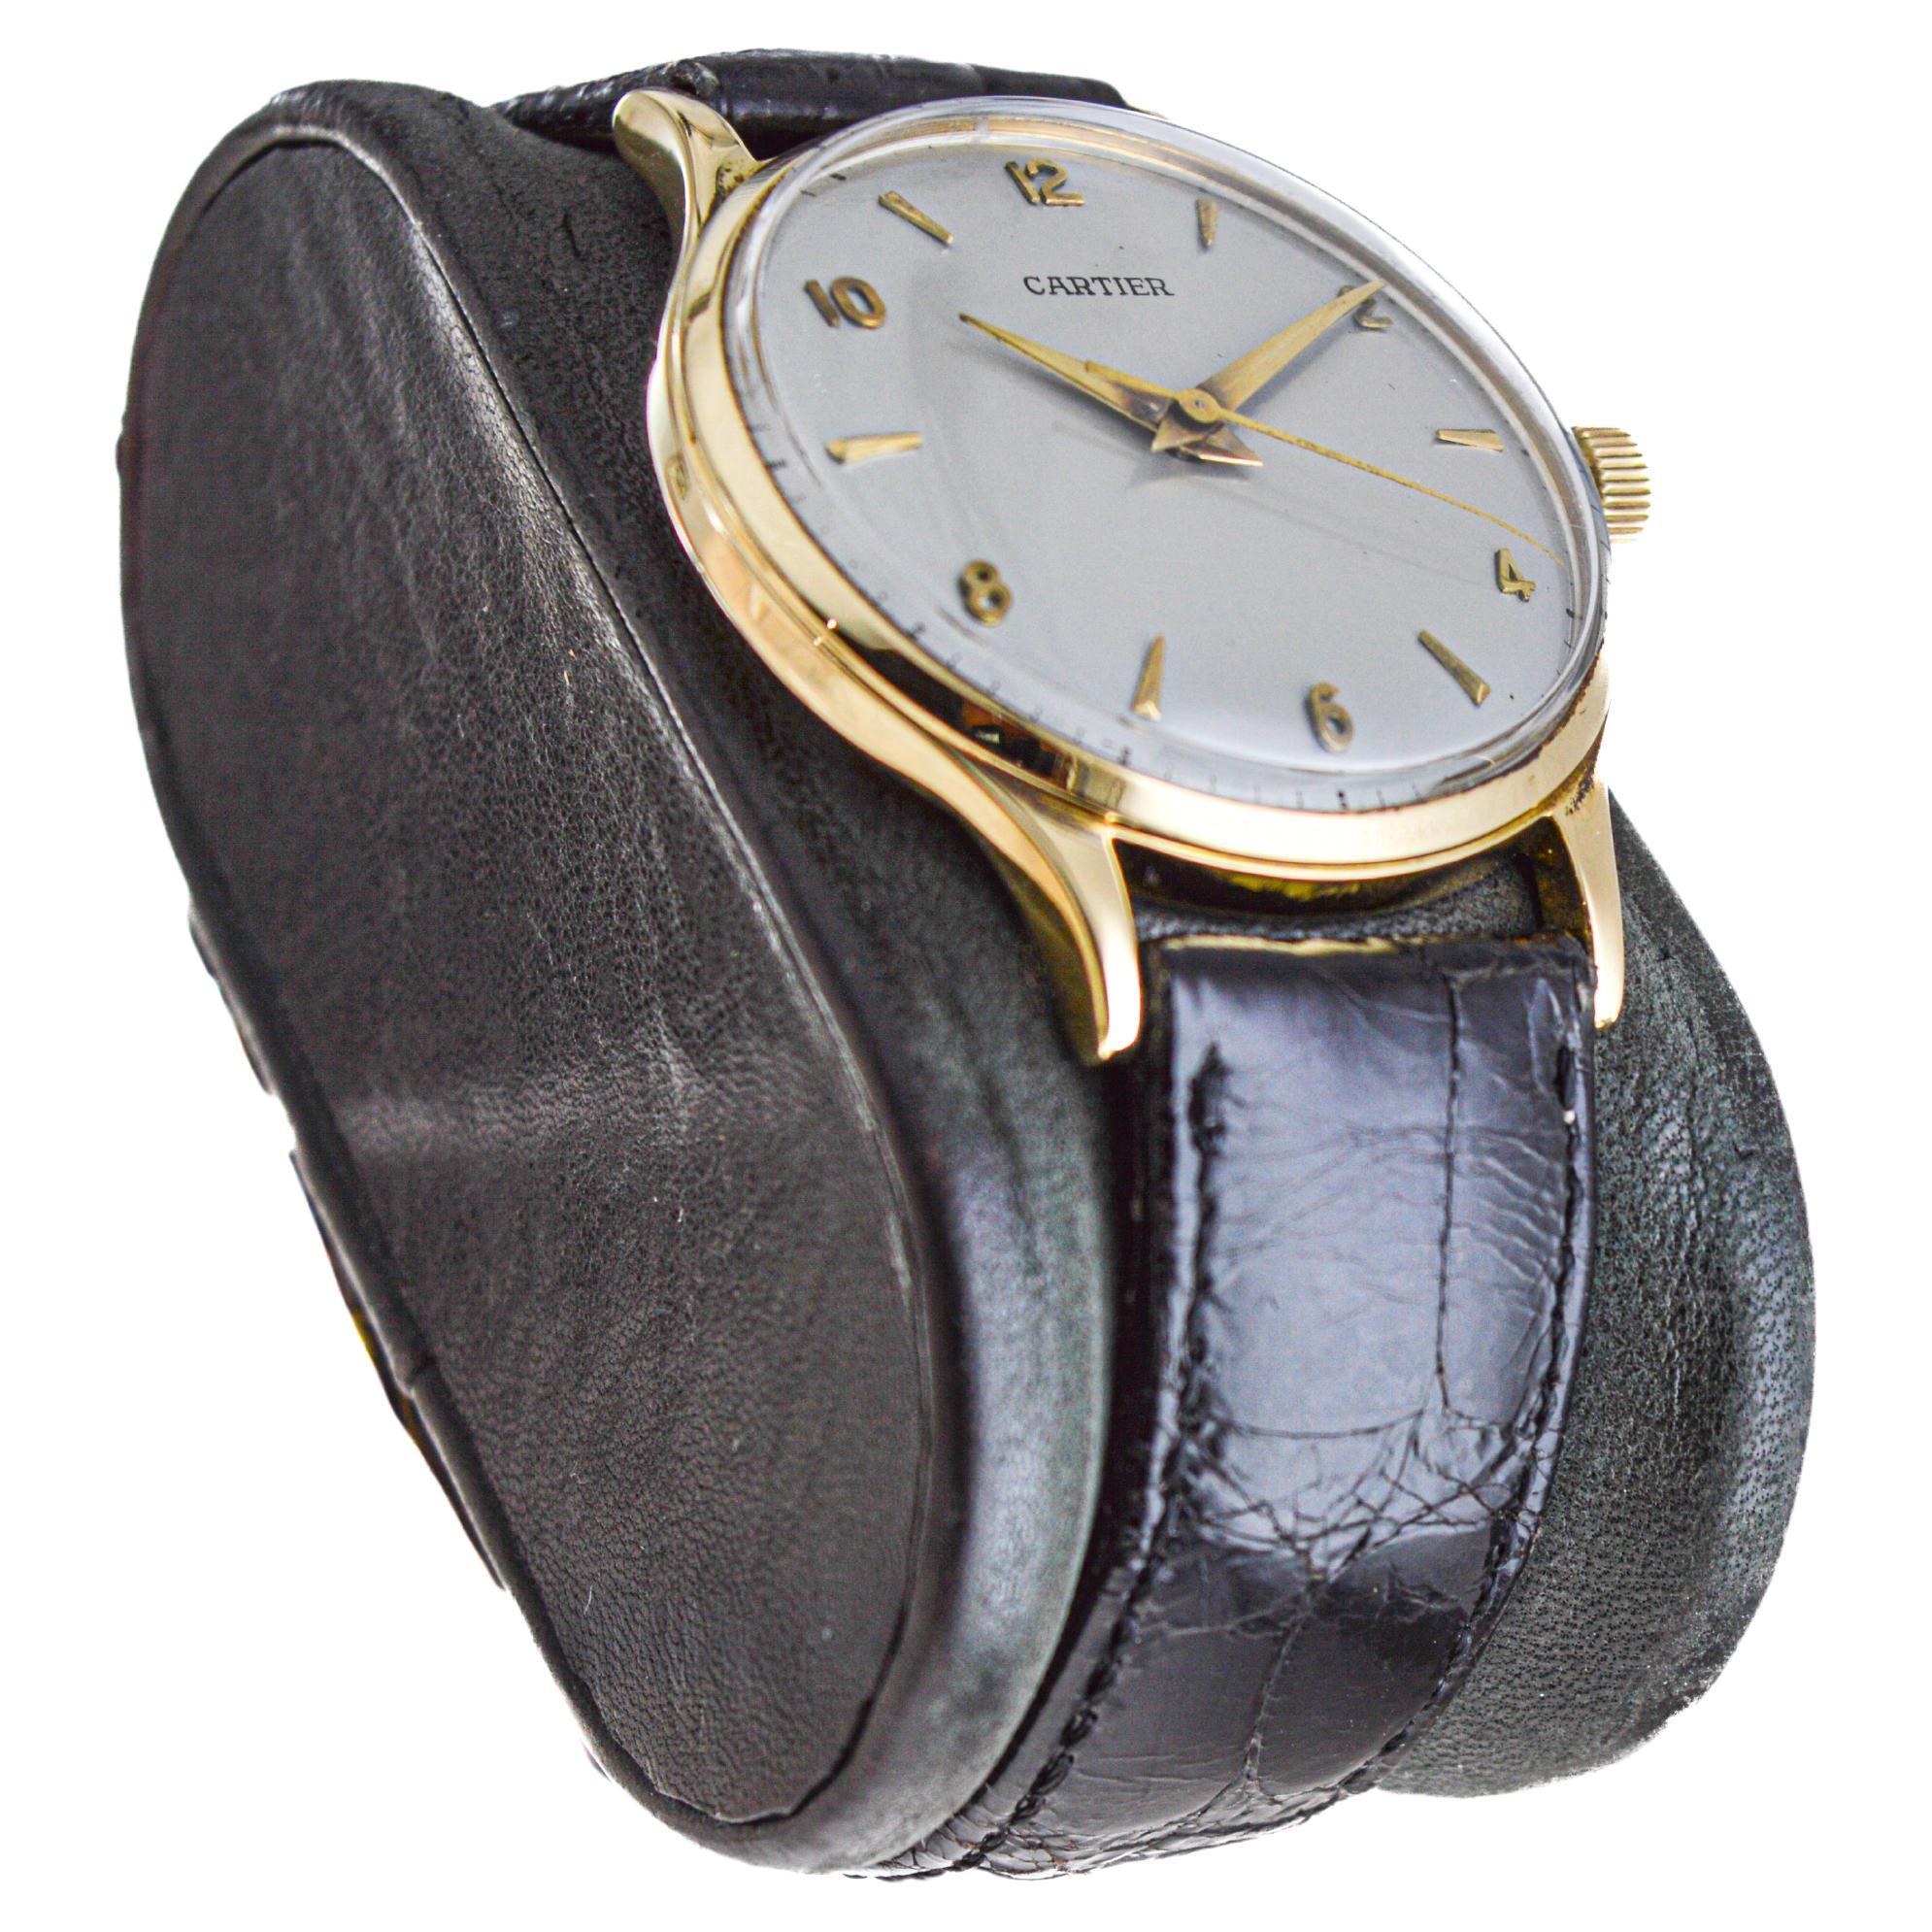 Cartier Paris 18Kt. Gold Calatrava Style Watch, from 1950's European Watch Co.  For Sale 5